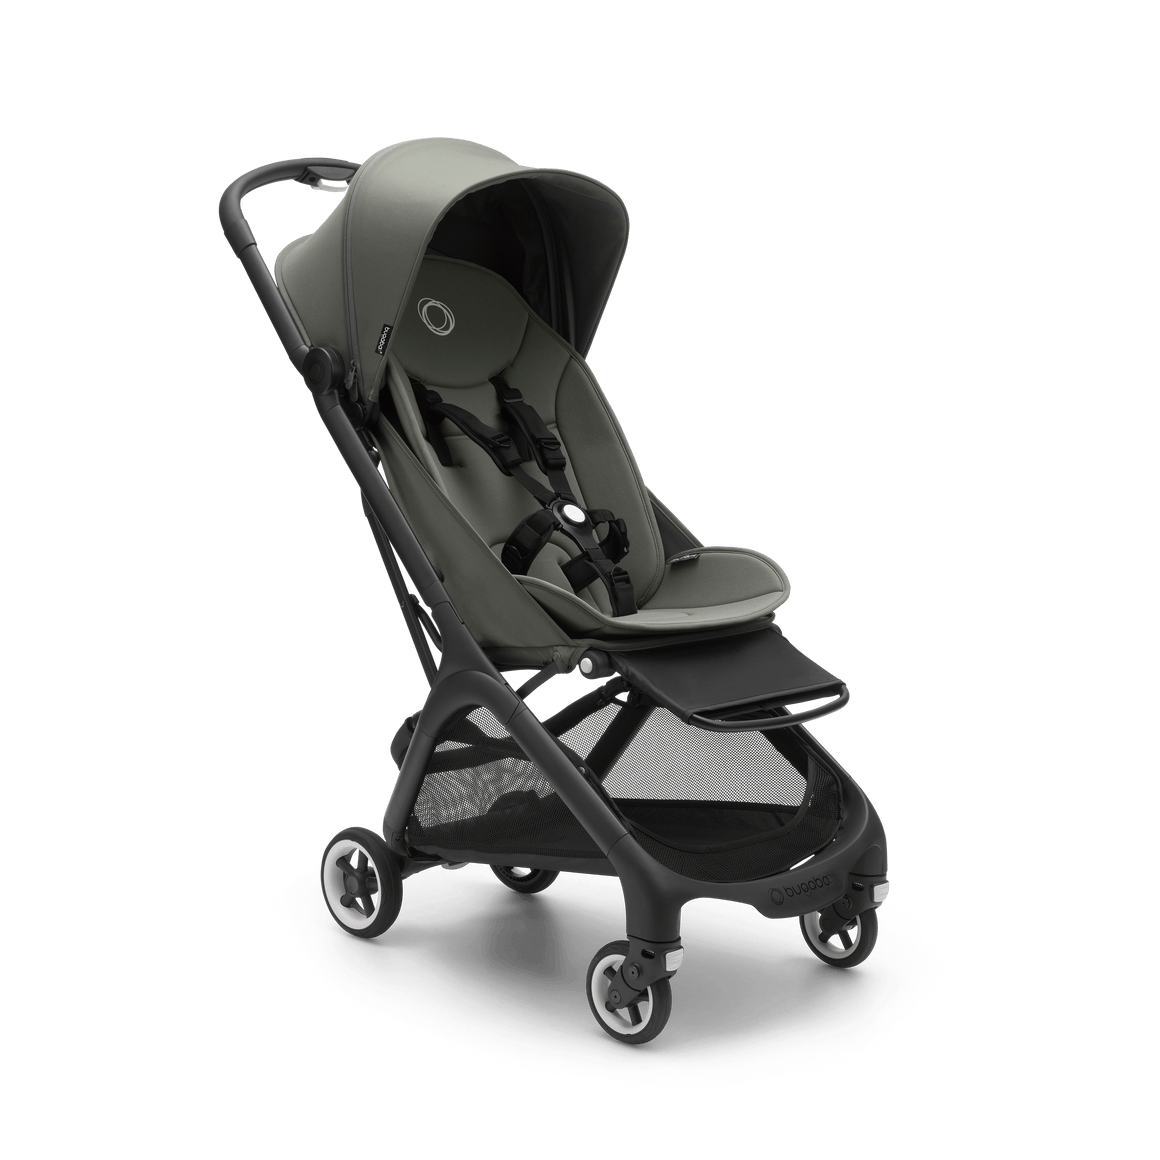 Sleek olive green travel stroller designed for ease of mobility and comfort.
